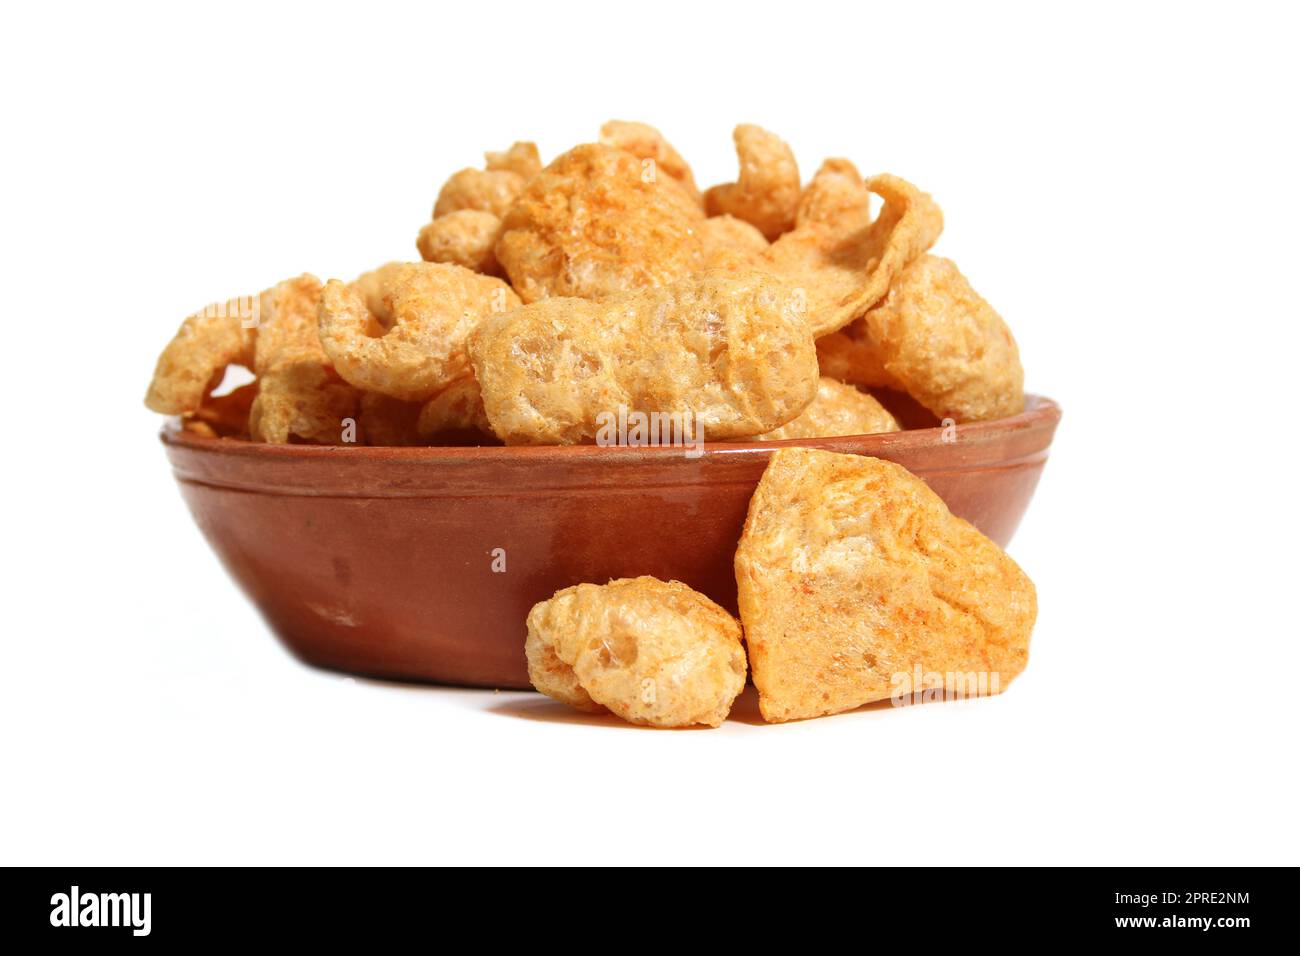 Bowl of Fried Pork Skins Isolated on White Background Stock Photo